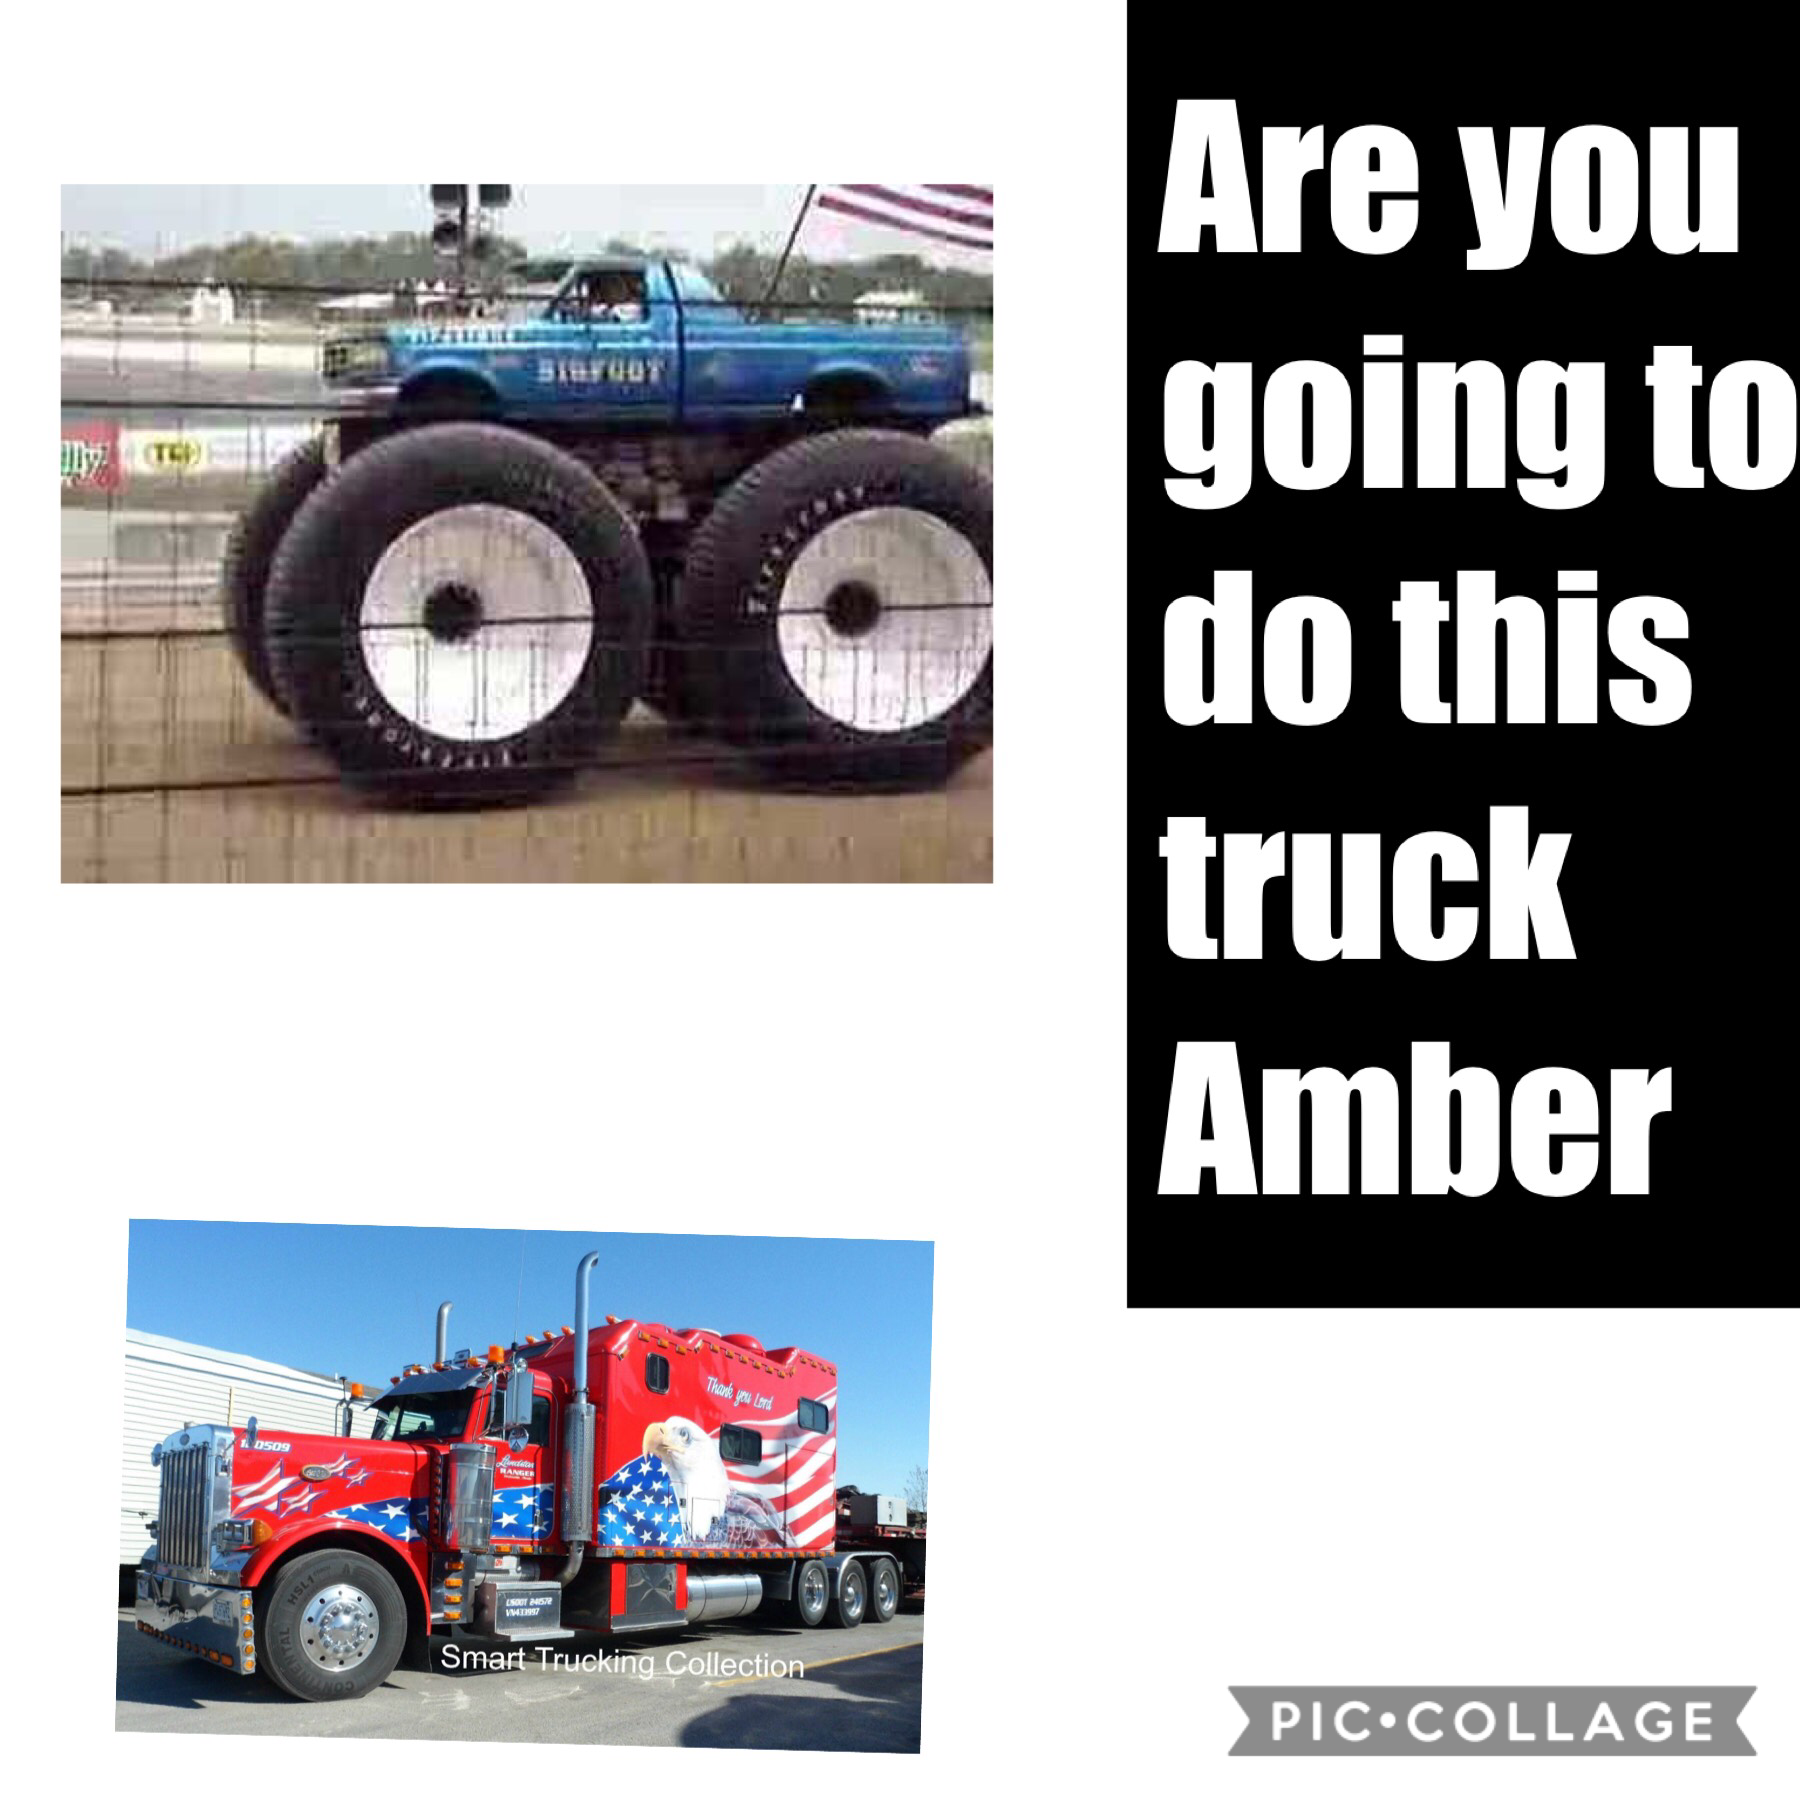 Trucks
